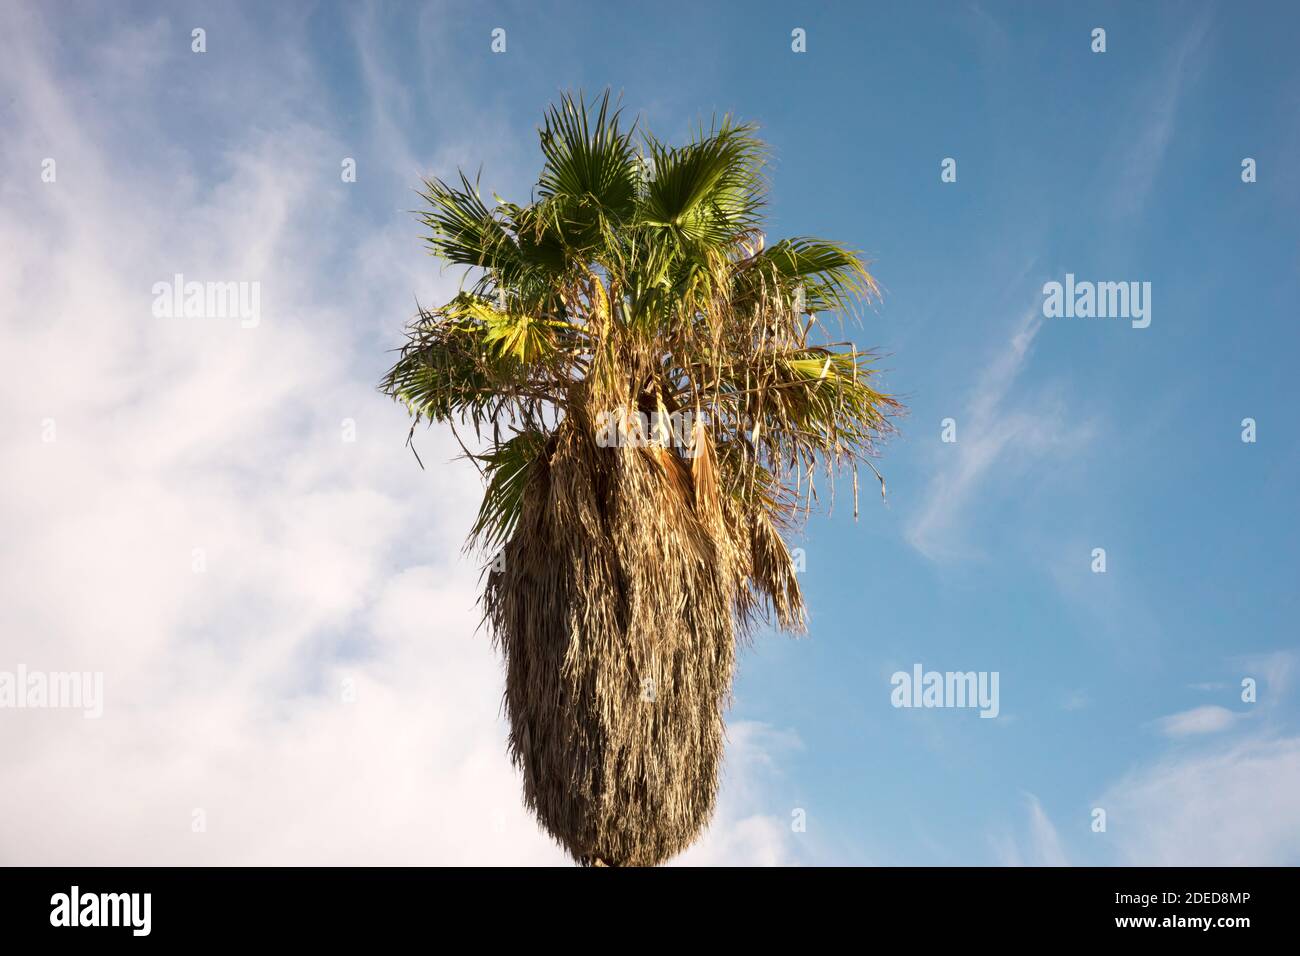 palm tree with sky background Stock Photo